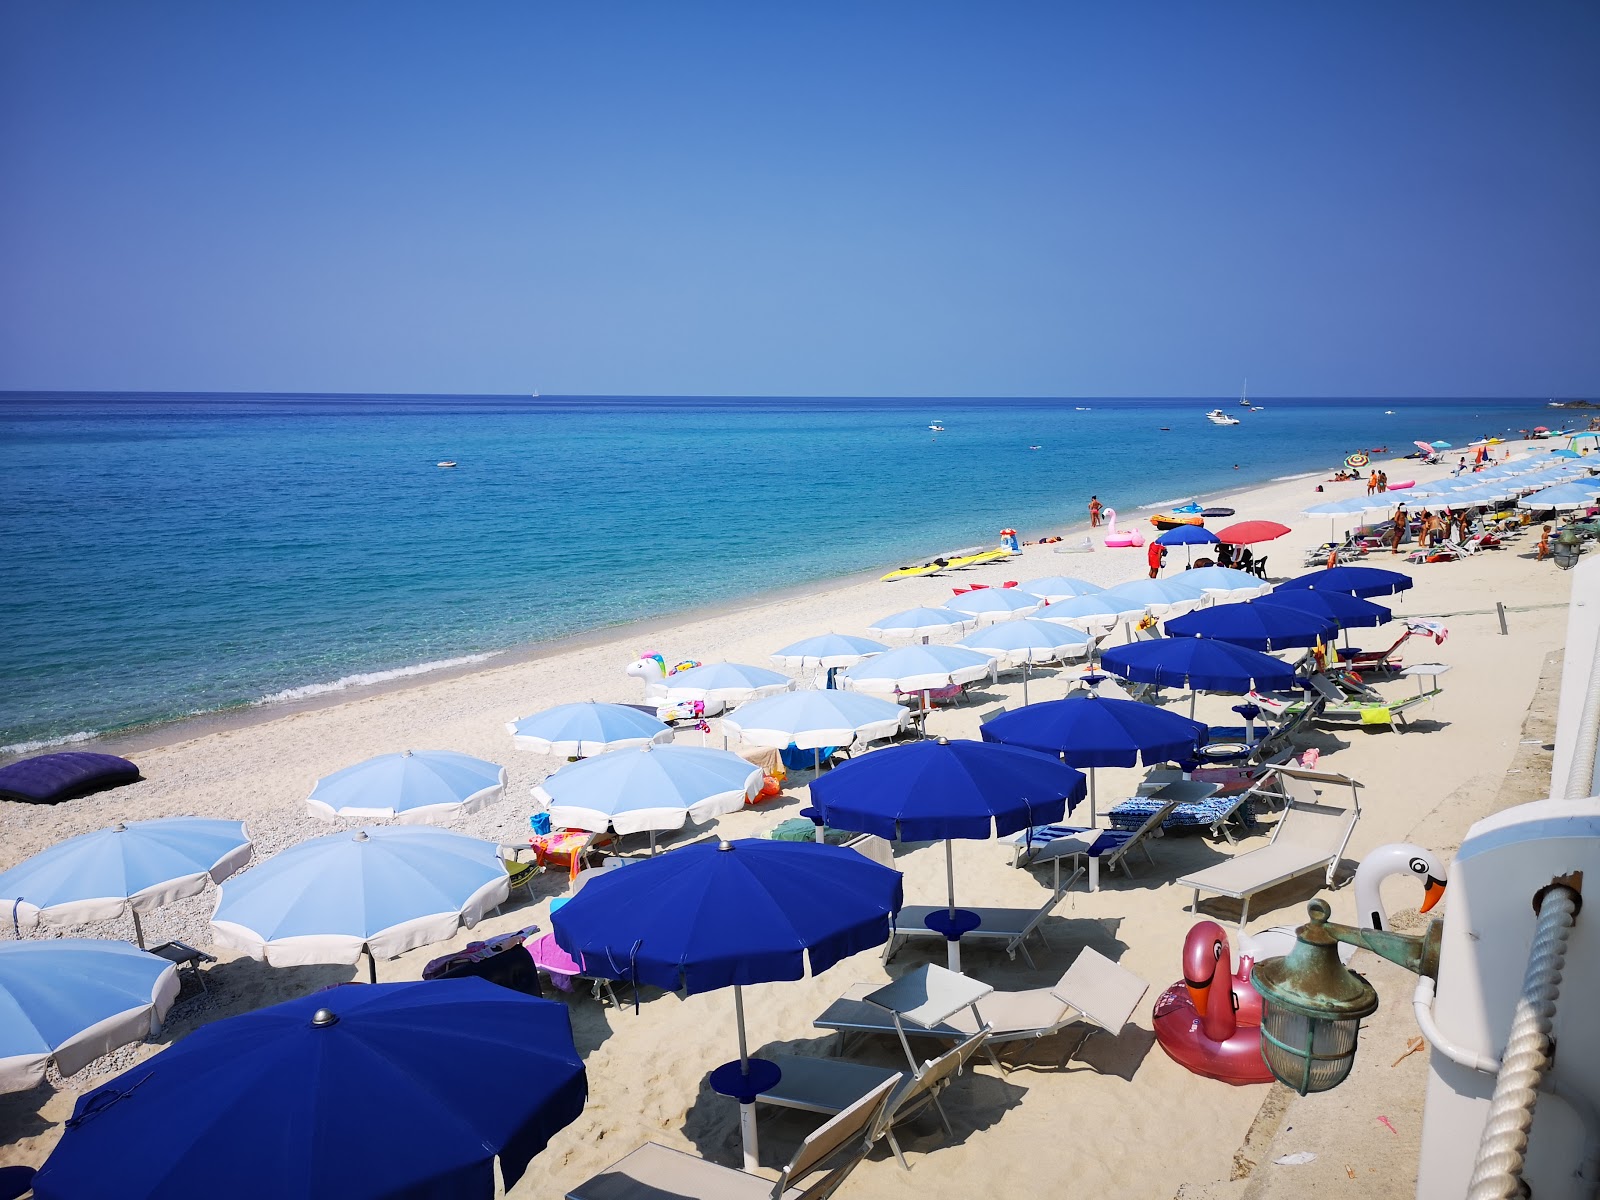 Spiaggia Libera Di Zambrone'in fotoğrafı plaj tatil beldesi alanı